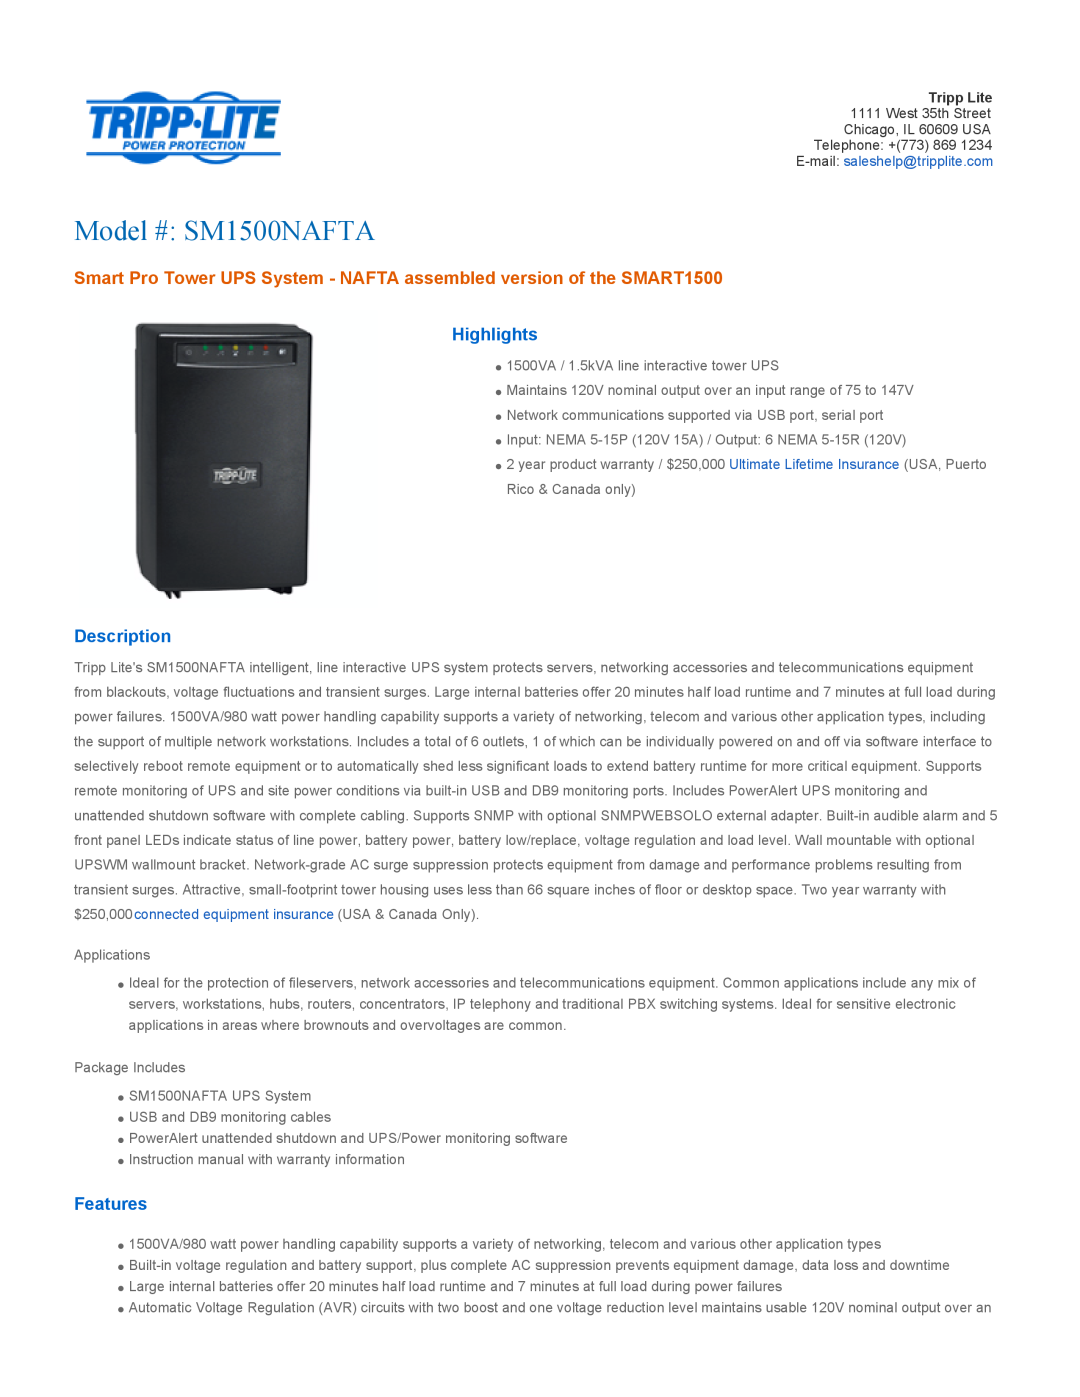 Tripp Lite warranty Highlights, Description, Features, Model # SM1500NAFTA 